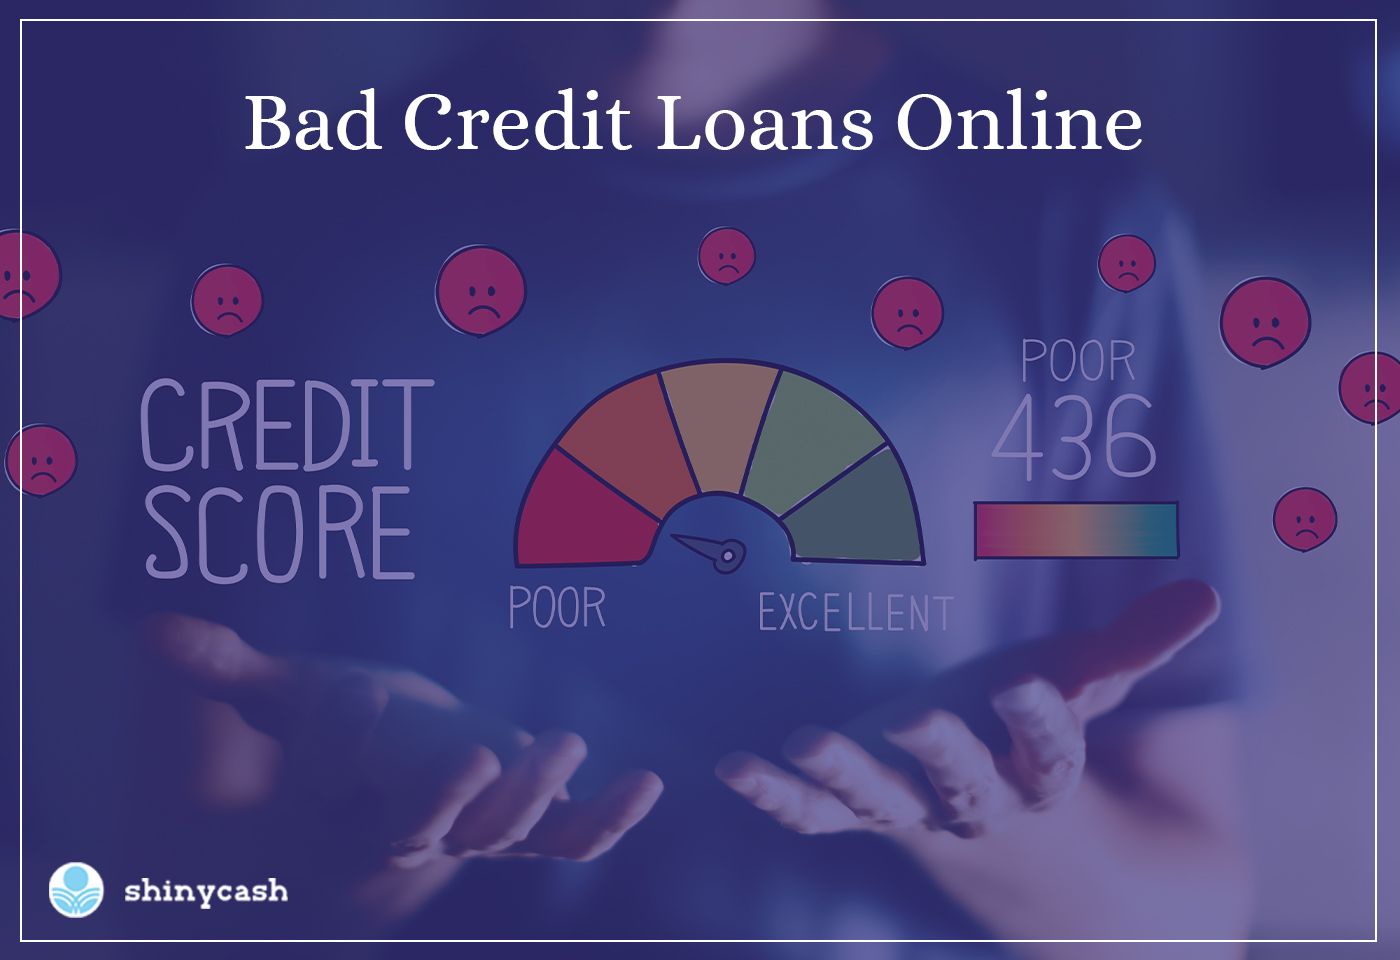 Bad Credit Loans Online: Installment Loans Fast